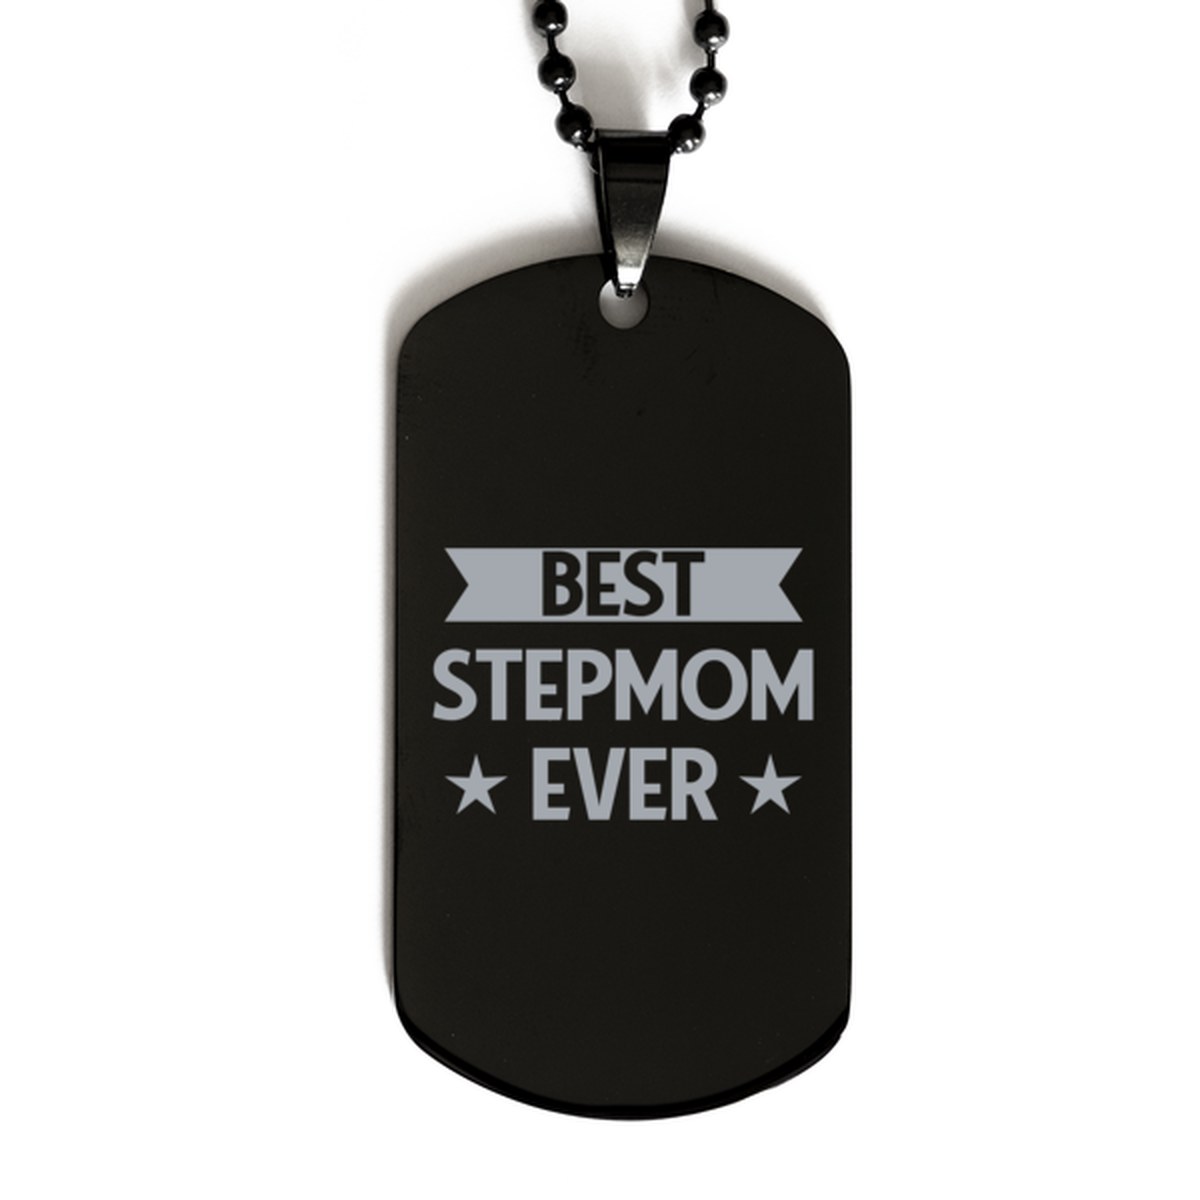 Best Stepmom Ever Stepmom Gifts, Funny Black Dog Tag For Stepmom, Birthday Family Presents Engraved Necklace For Women